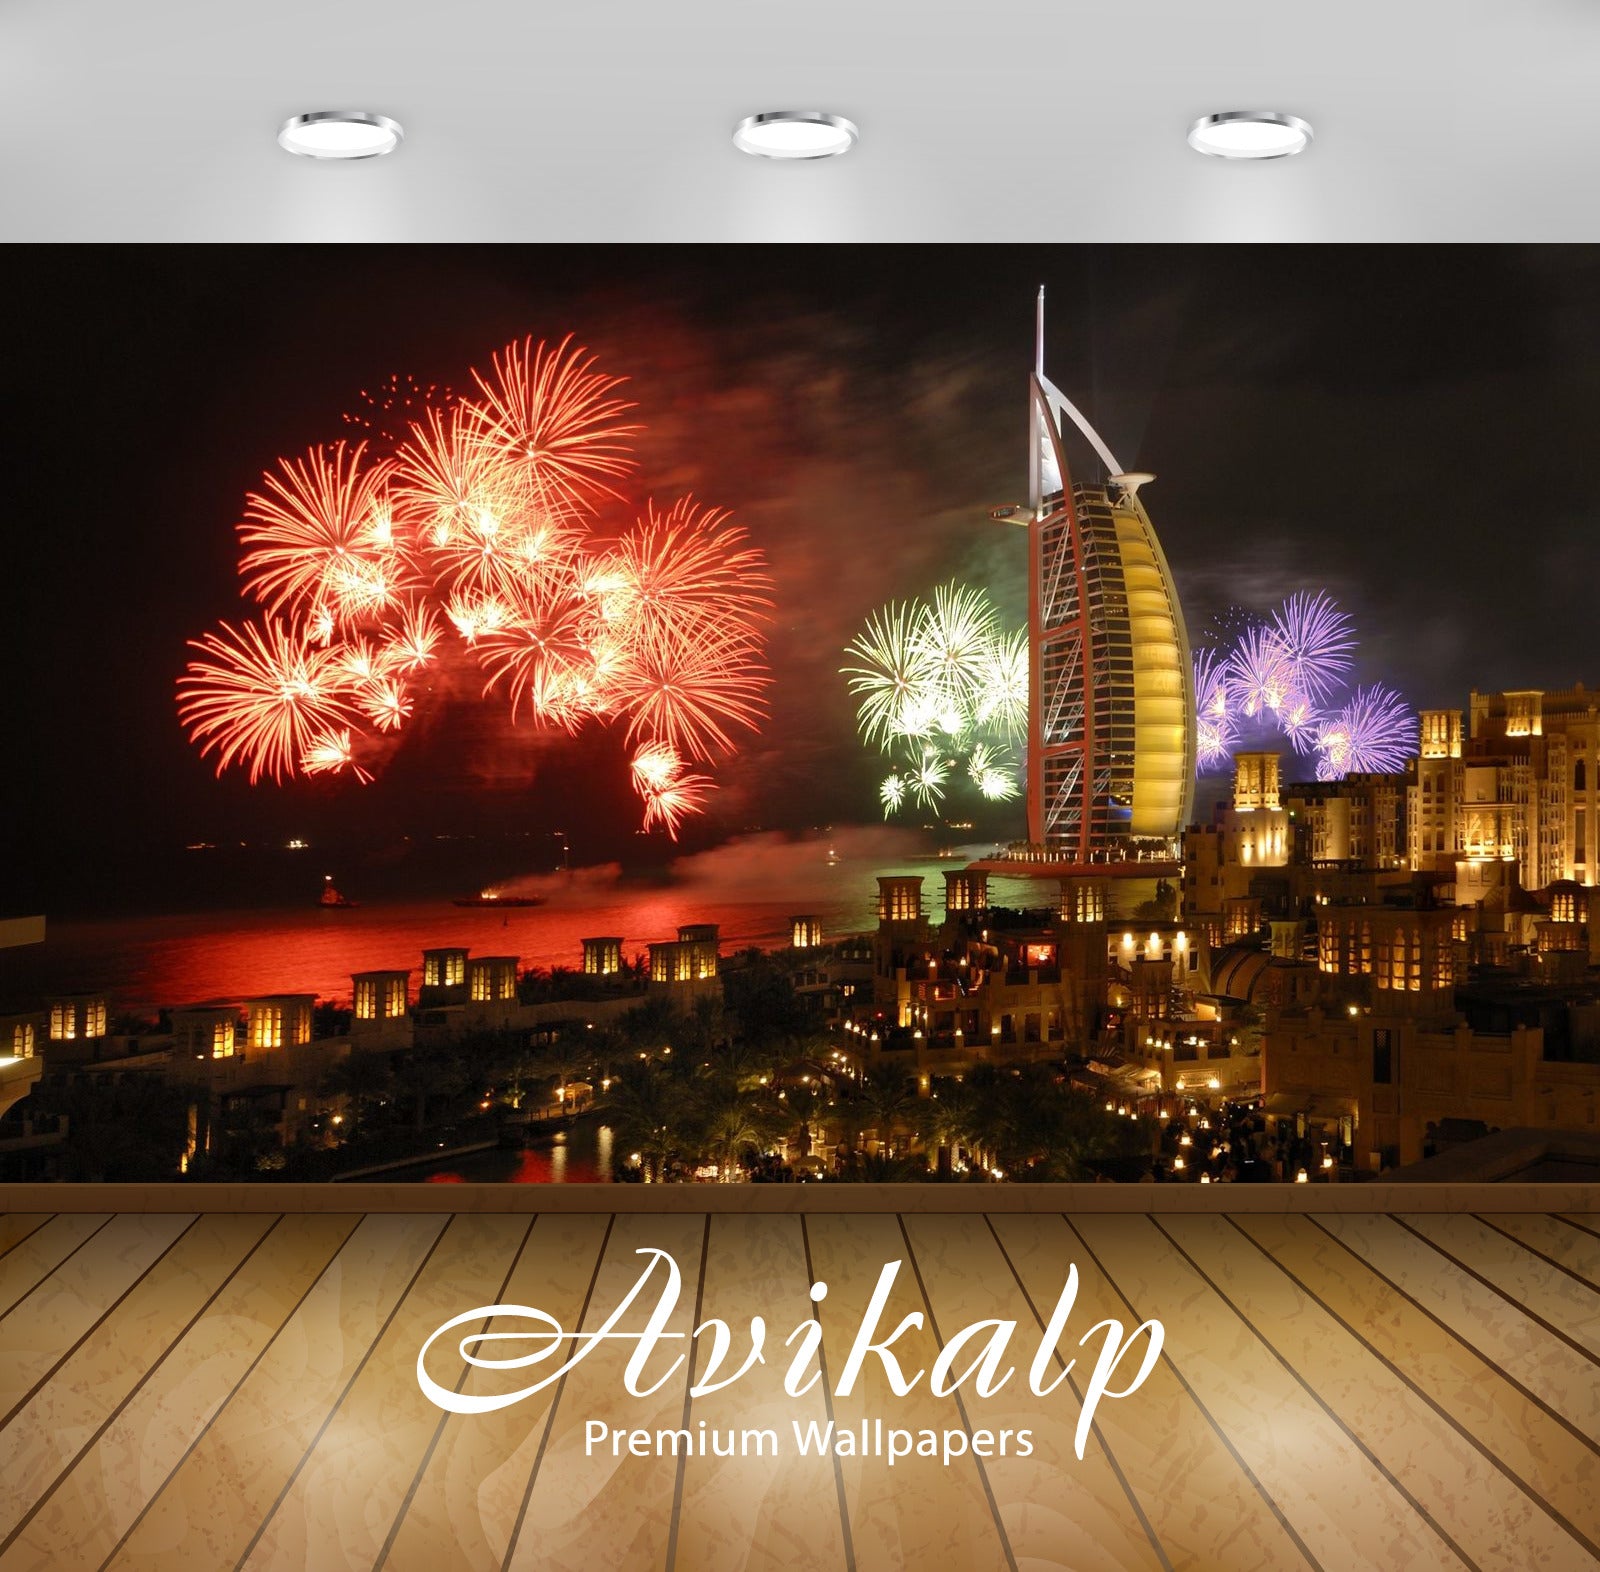 Avikalp Exclusive Awi2461 Burj Al Arab Jumeirah Hotel In Dubai New Year Fireworks Full HD Wallpapers